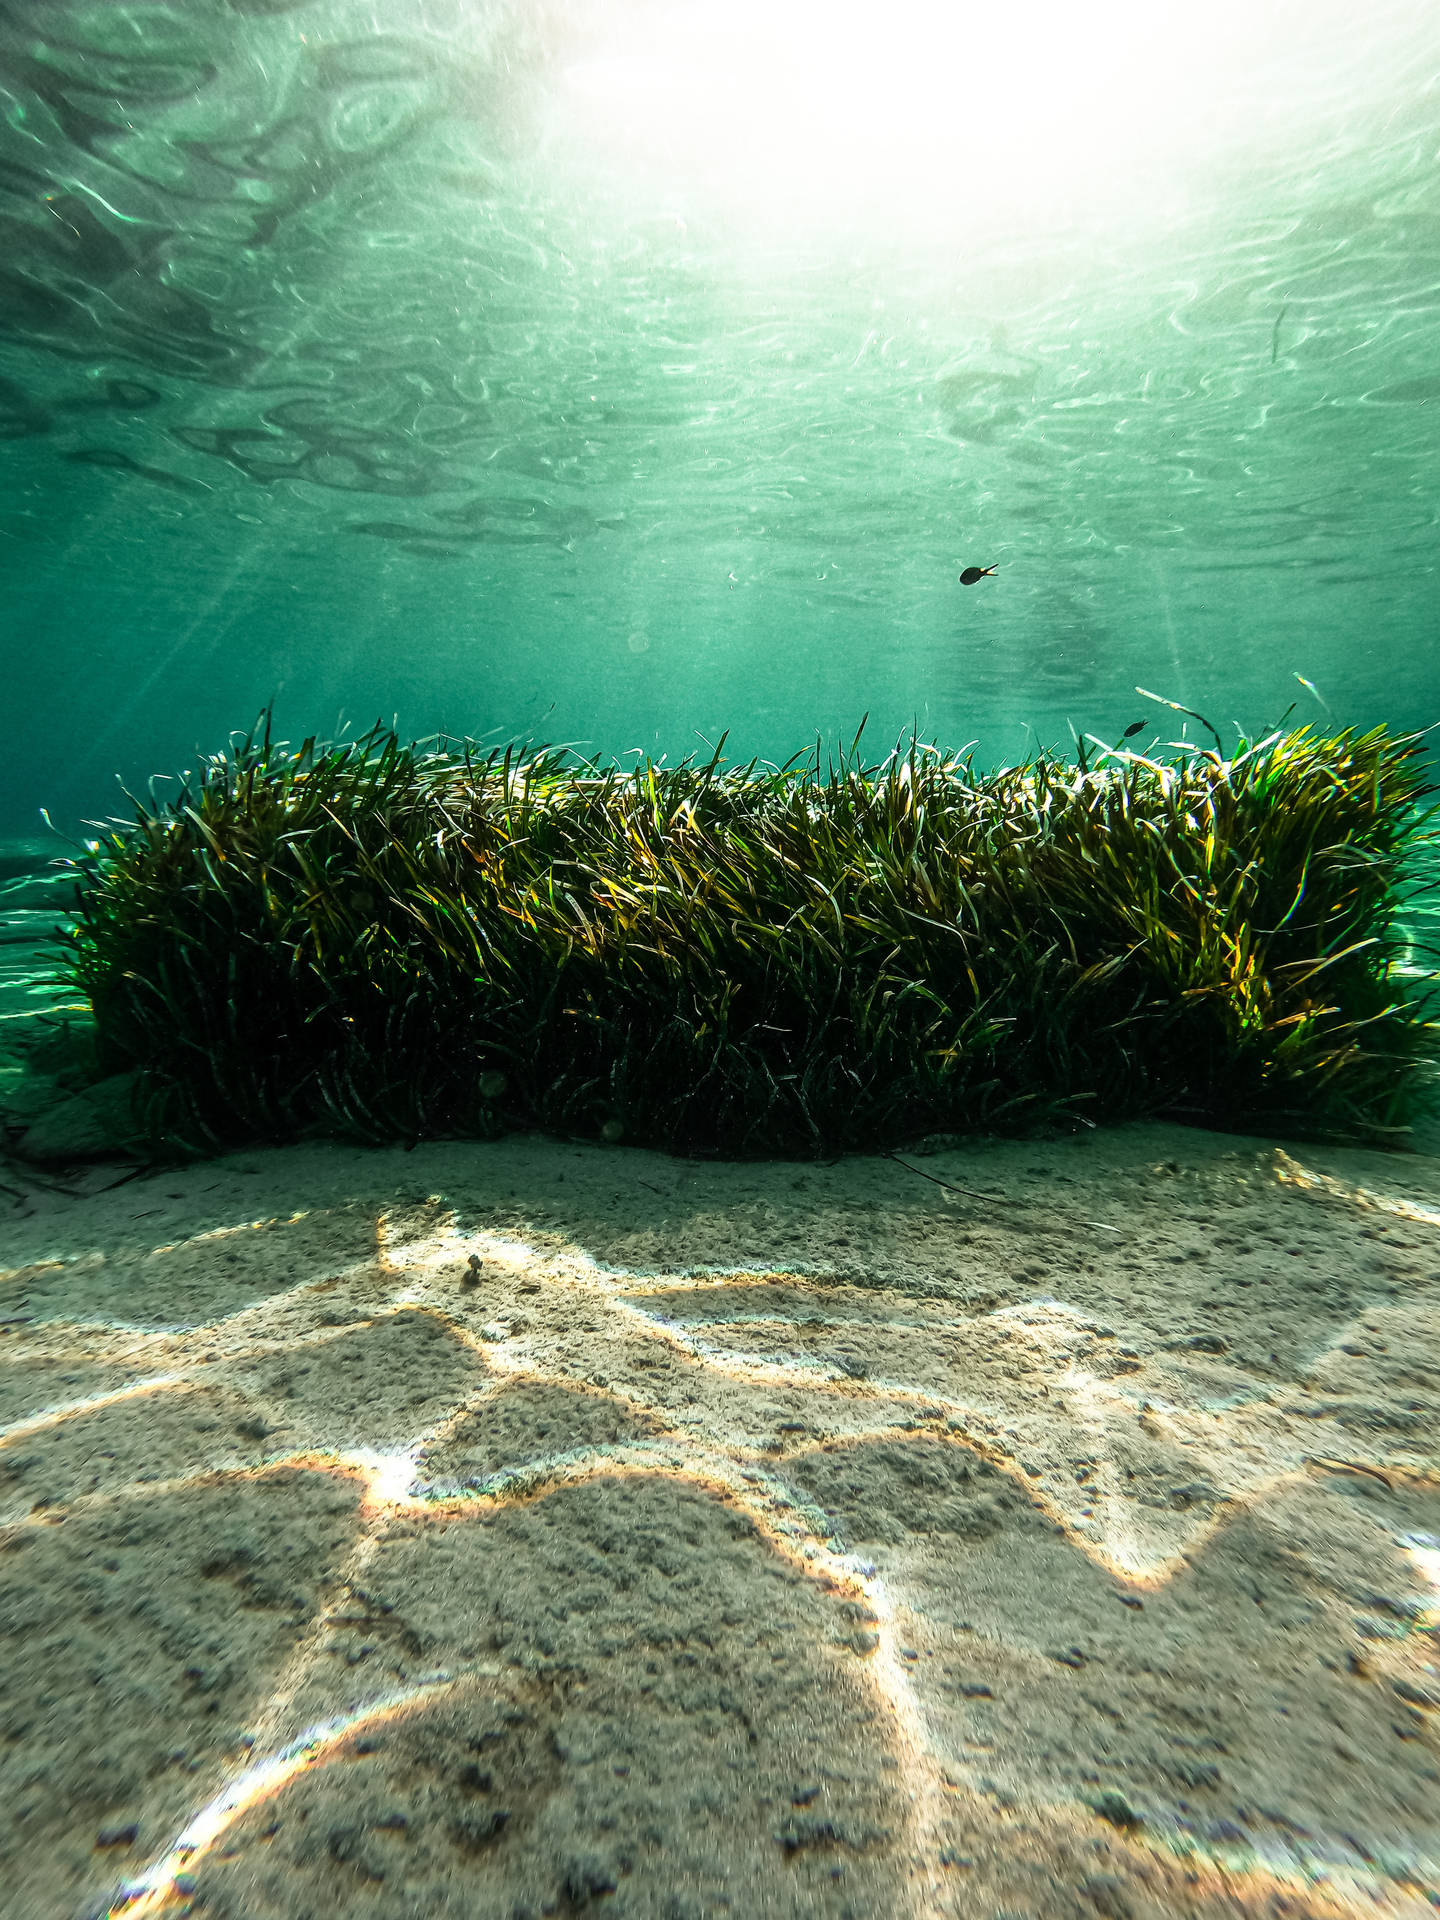 Schöneneptungras-algenpflanze Wallpaper